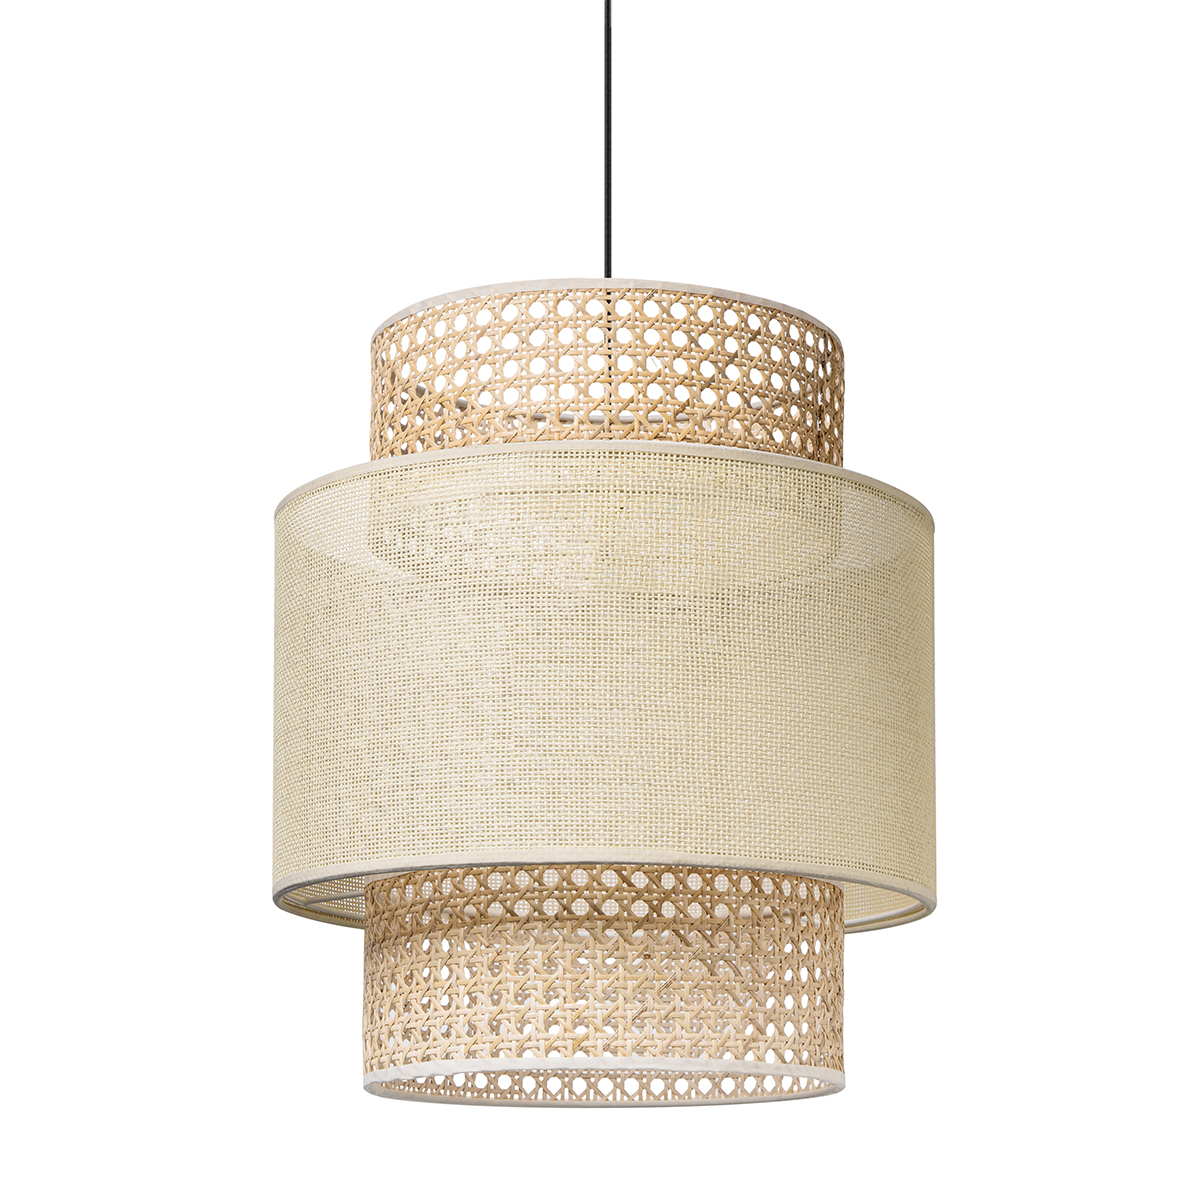 Tangla lighting - TLP7085-01S - LED Pendant lamp 1 Light - paper rattan + linen - natural - yarn - small - E27